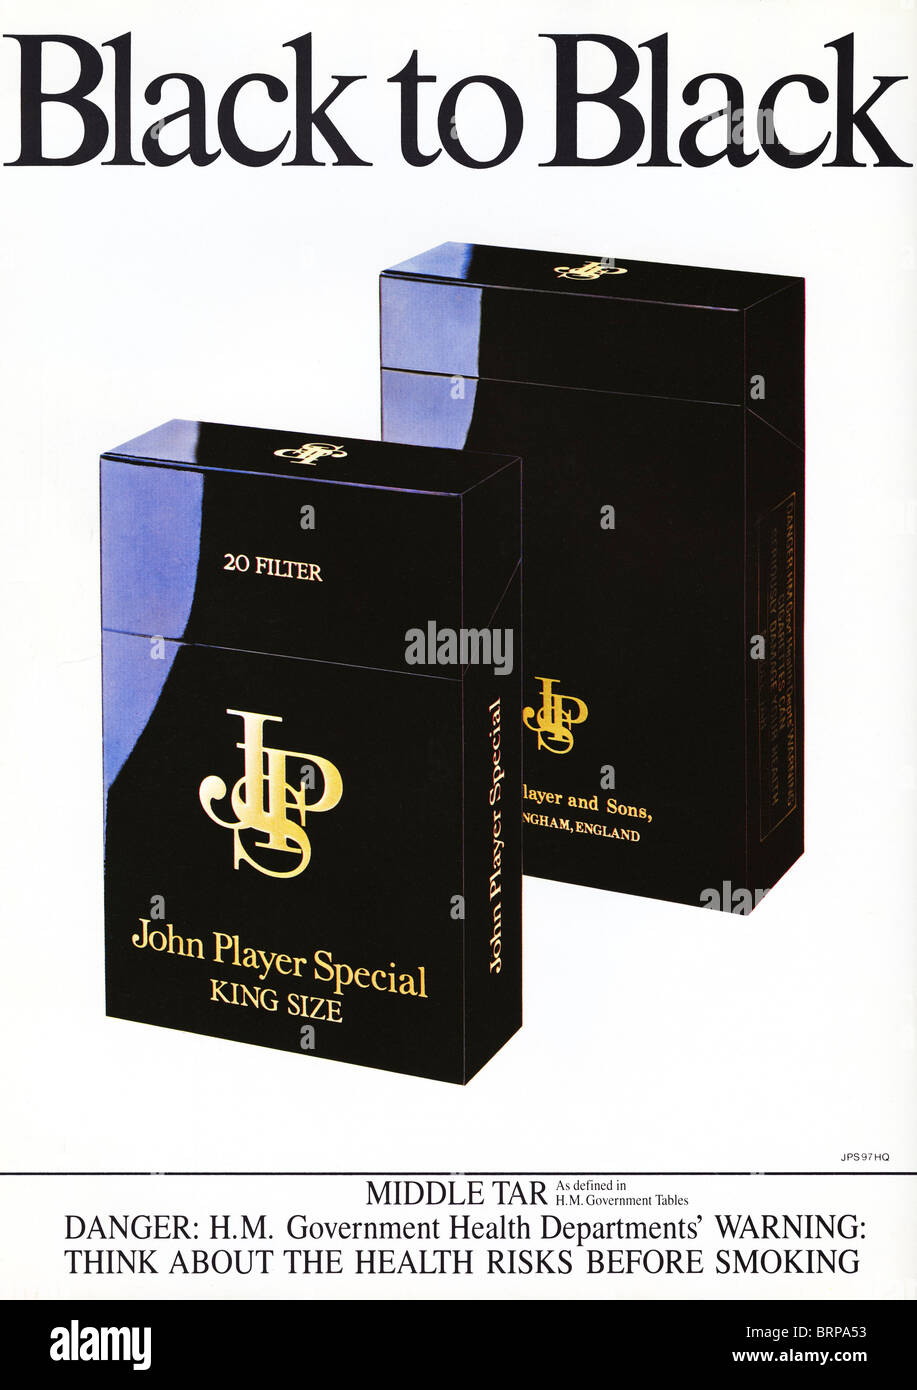 John Player Special Legendary Black Cigarettes